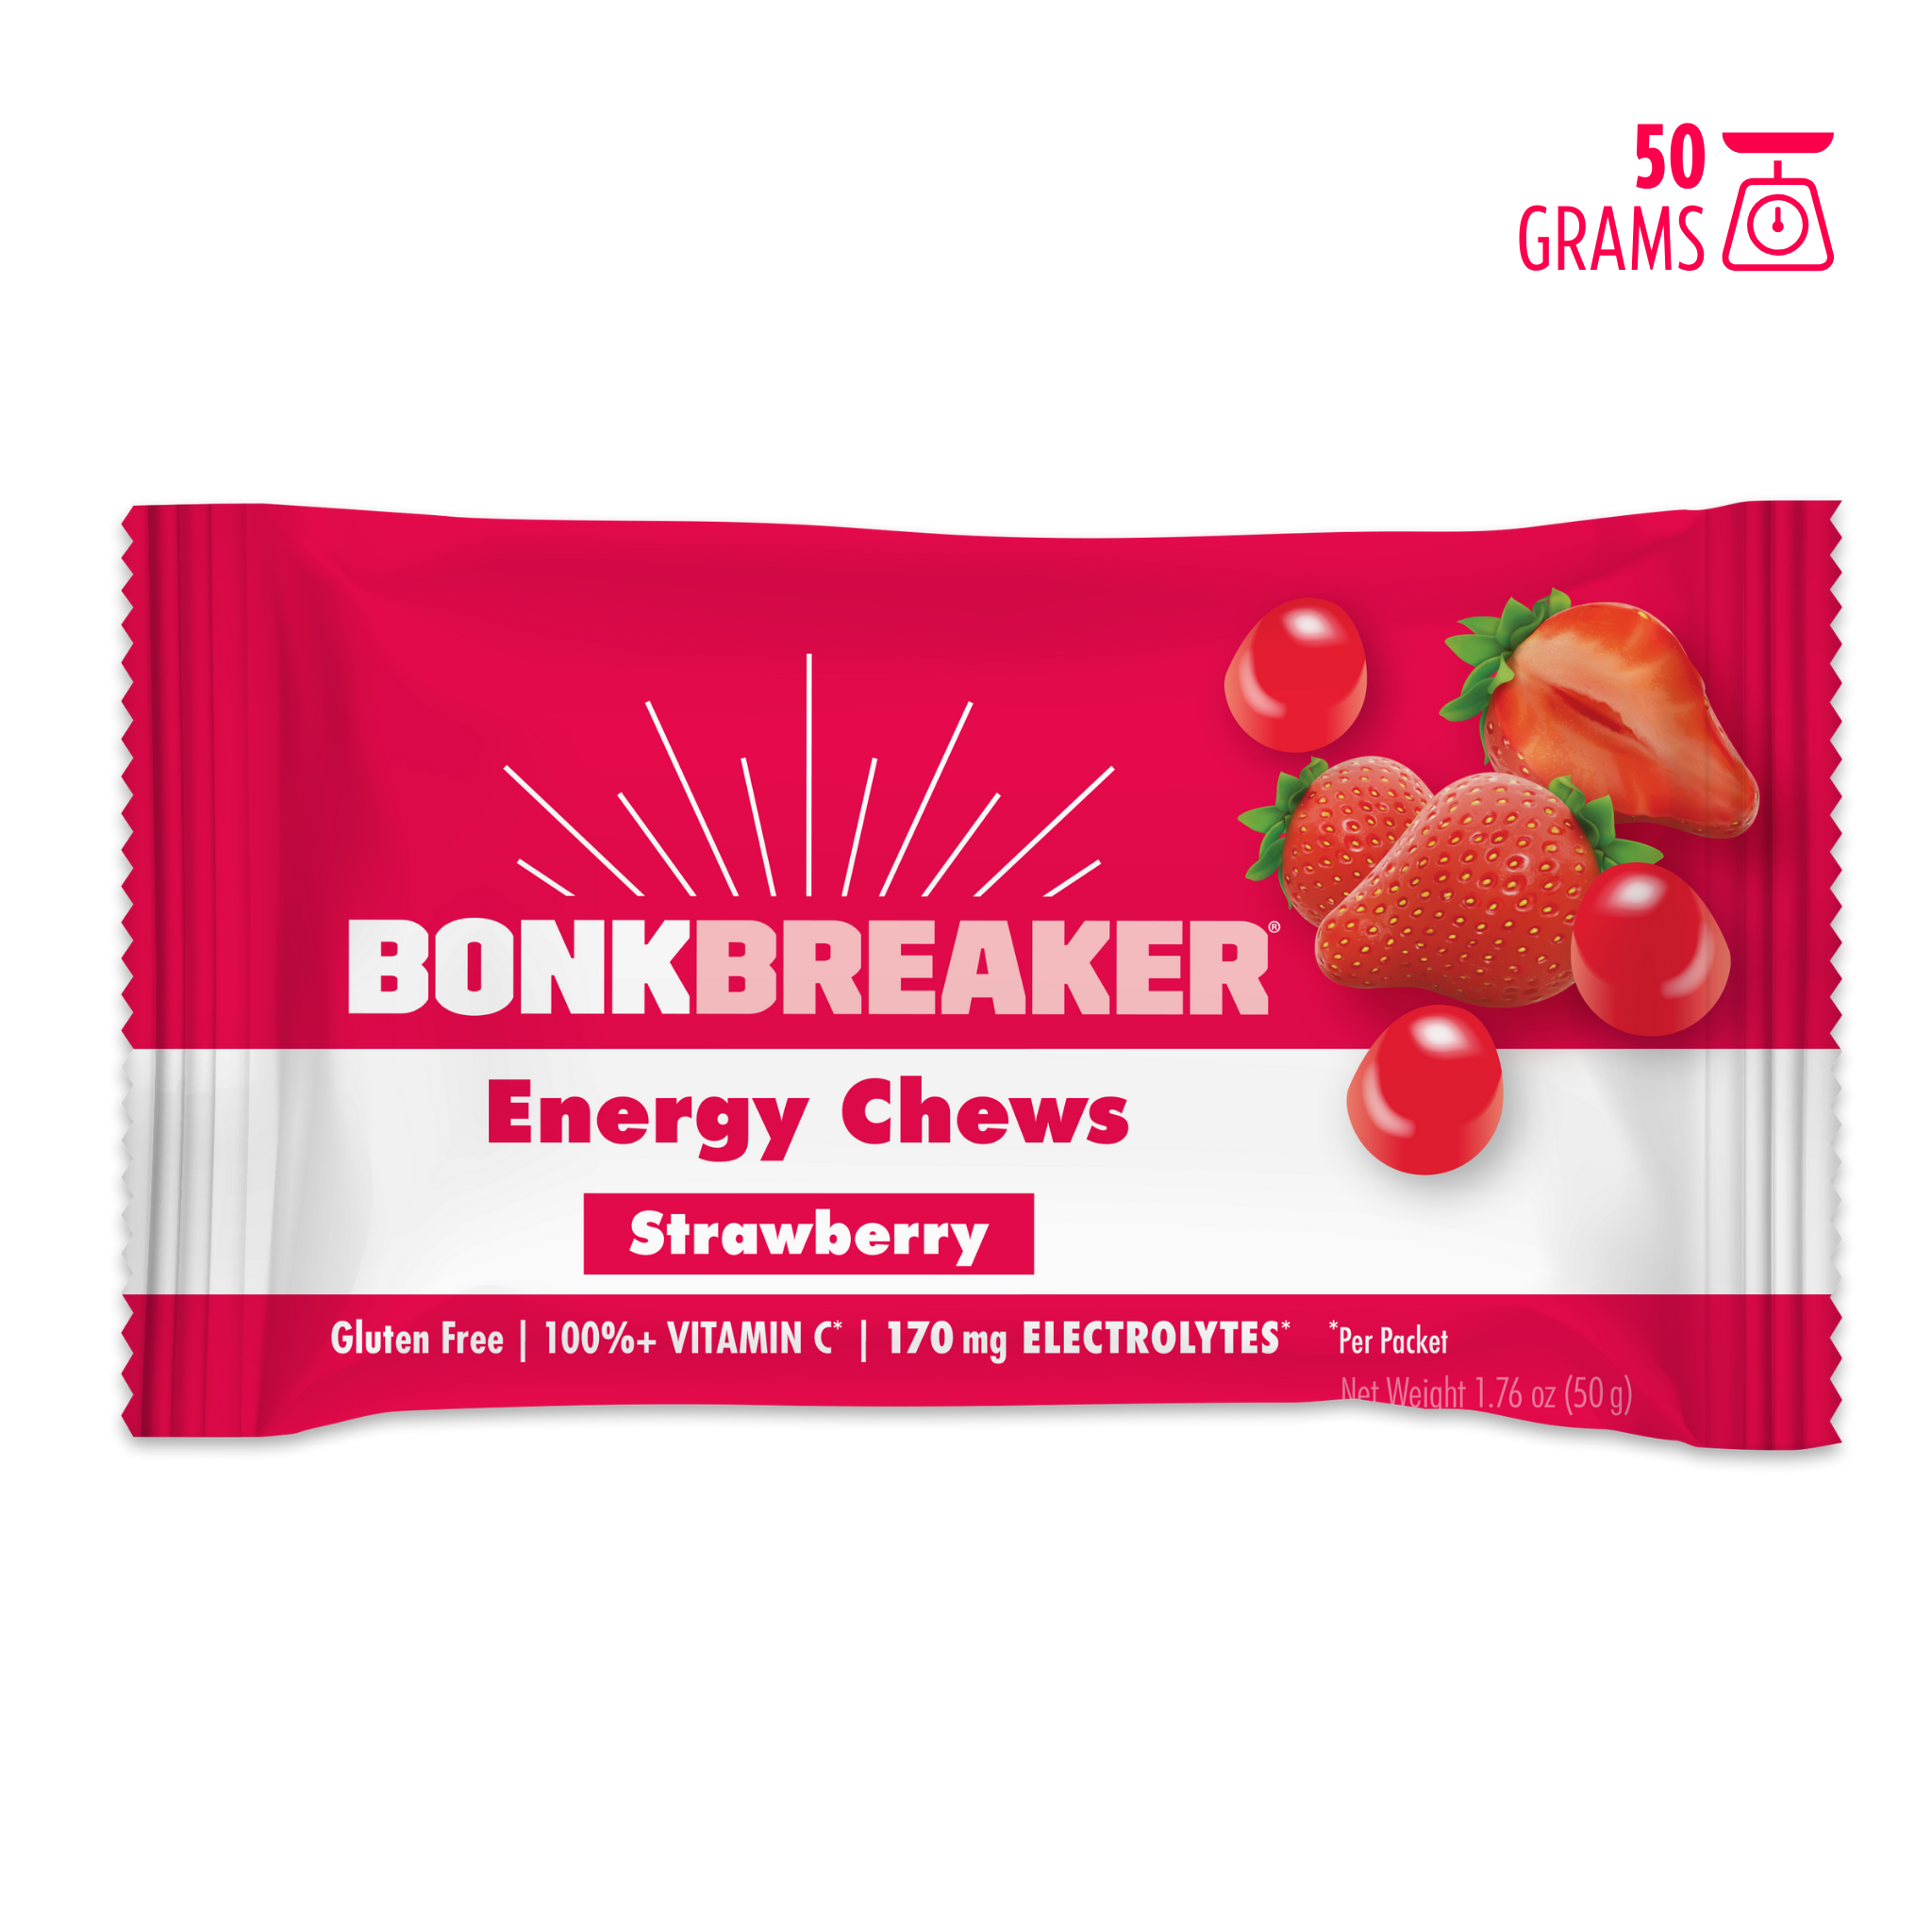 Bonk Breaker Energy chews Strawberry (50g)